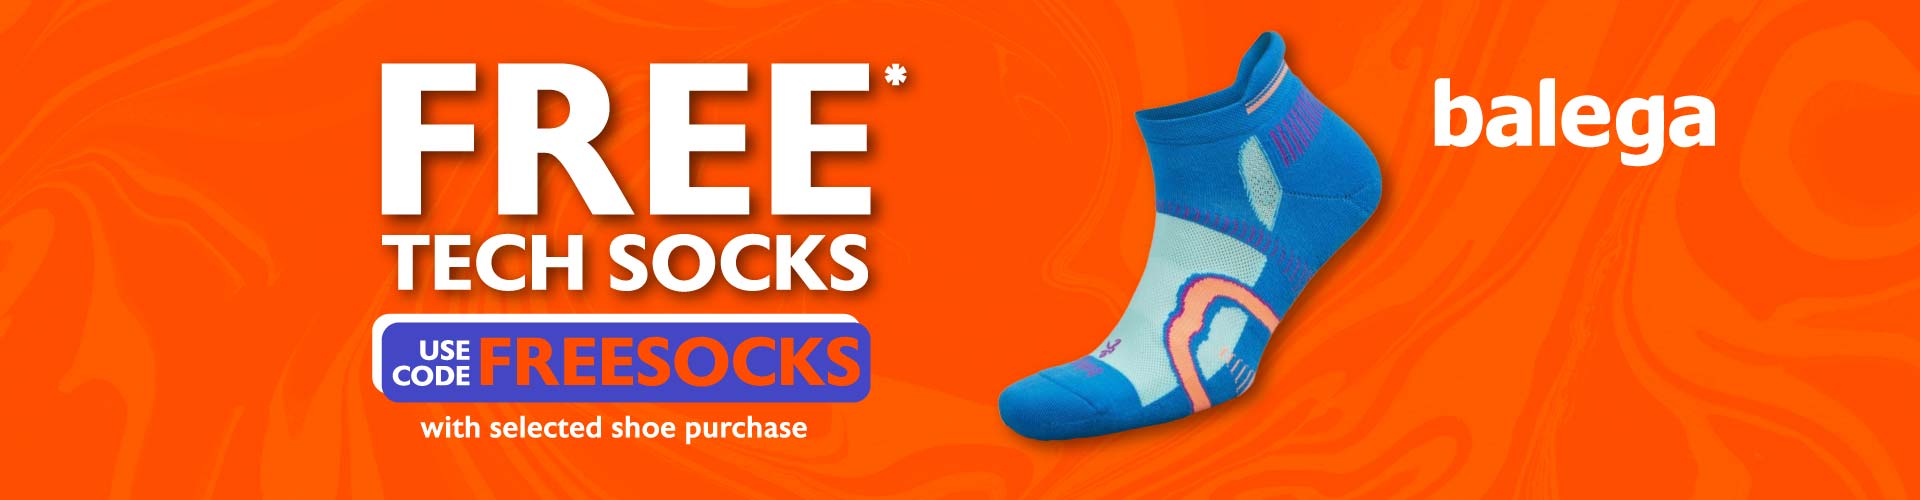 FREE Balega Running Socks With Shoe Purchase